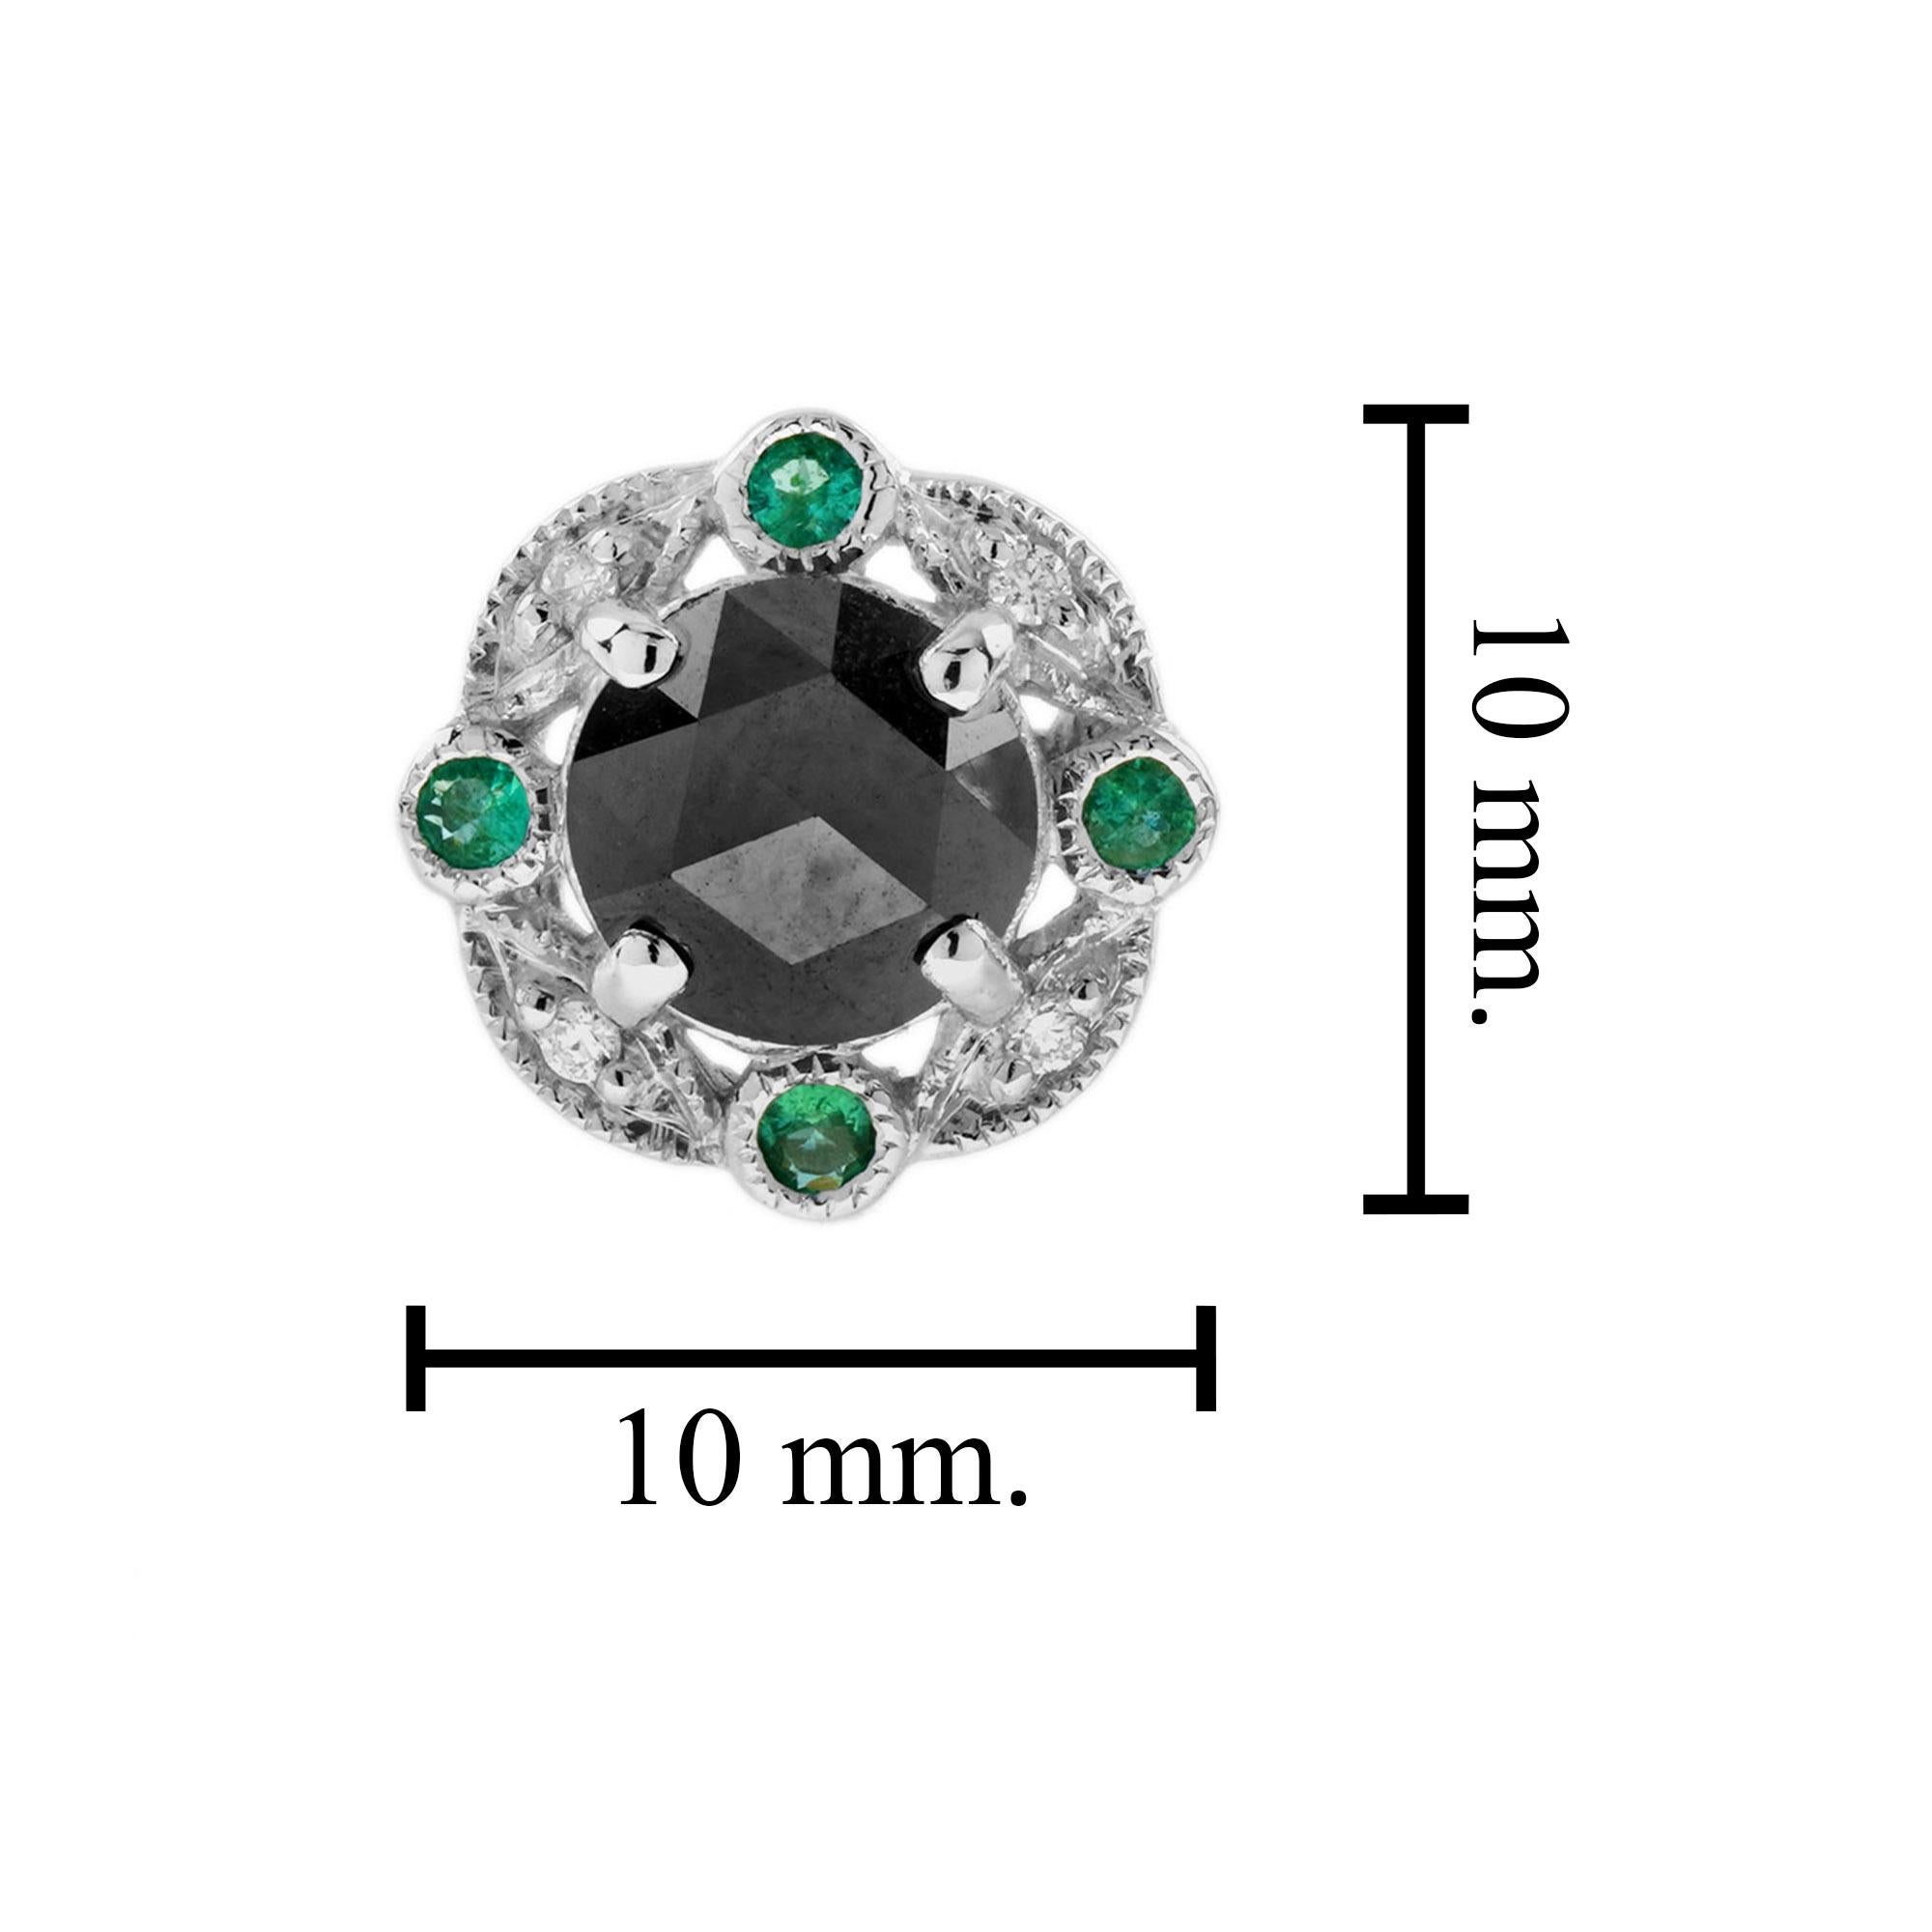 1.95 Ct. Black Diamond Emerald Art Deco Inspired Stud Earrings in 14K Gold For Sale 1